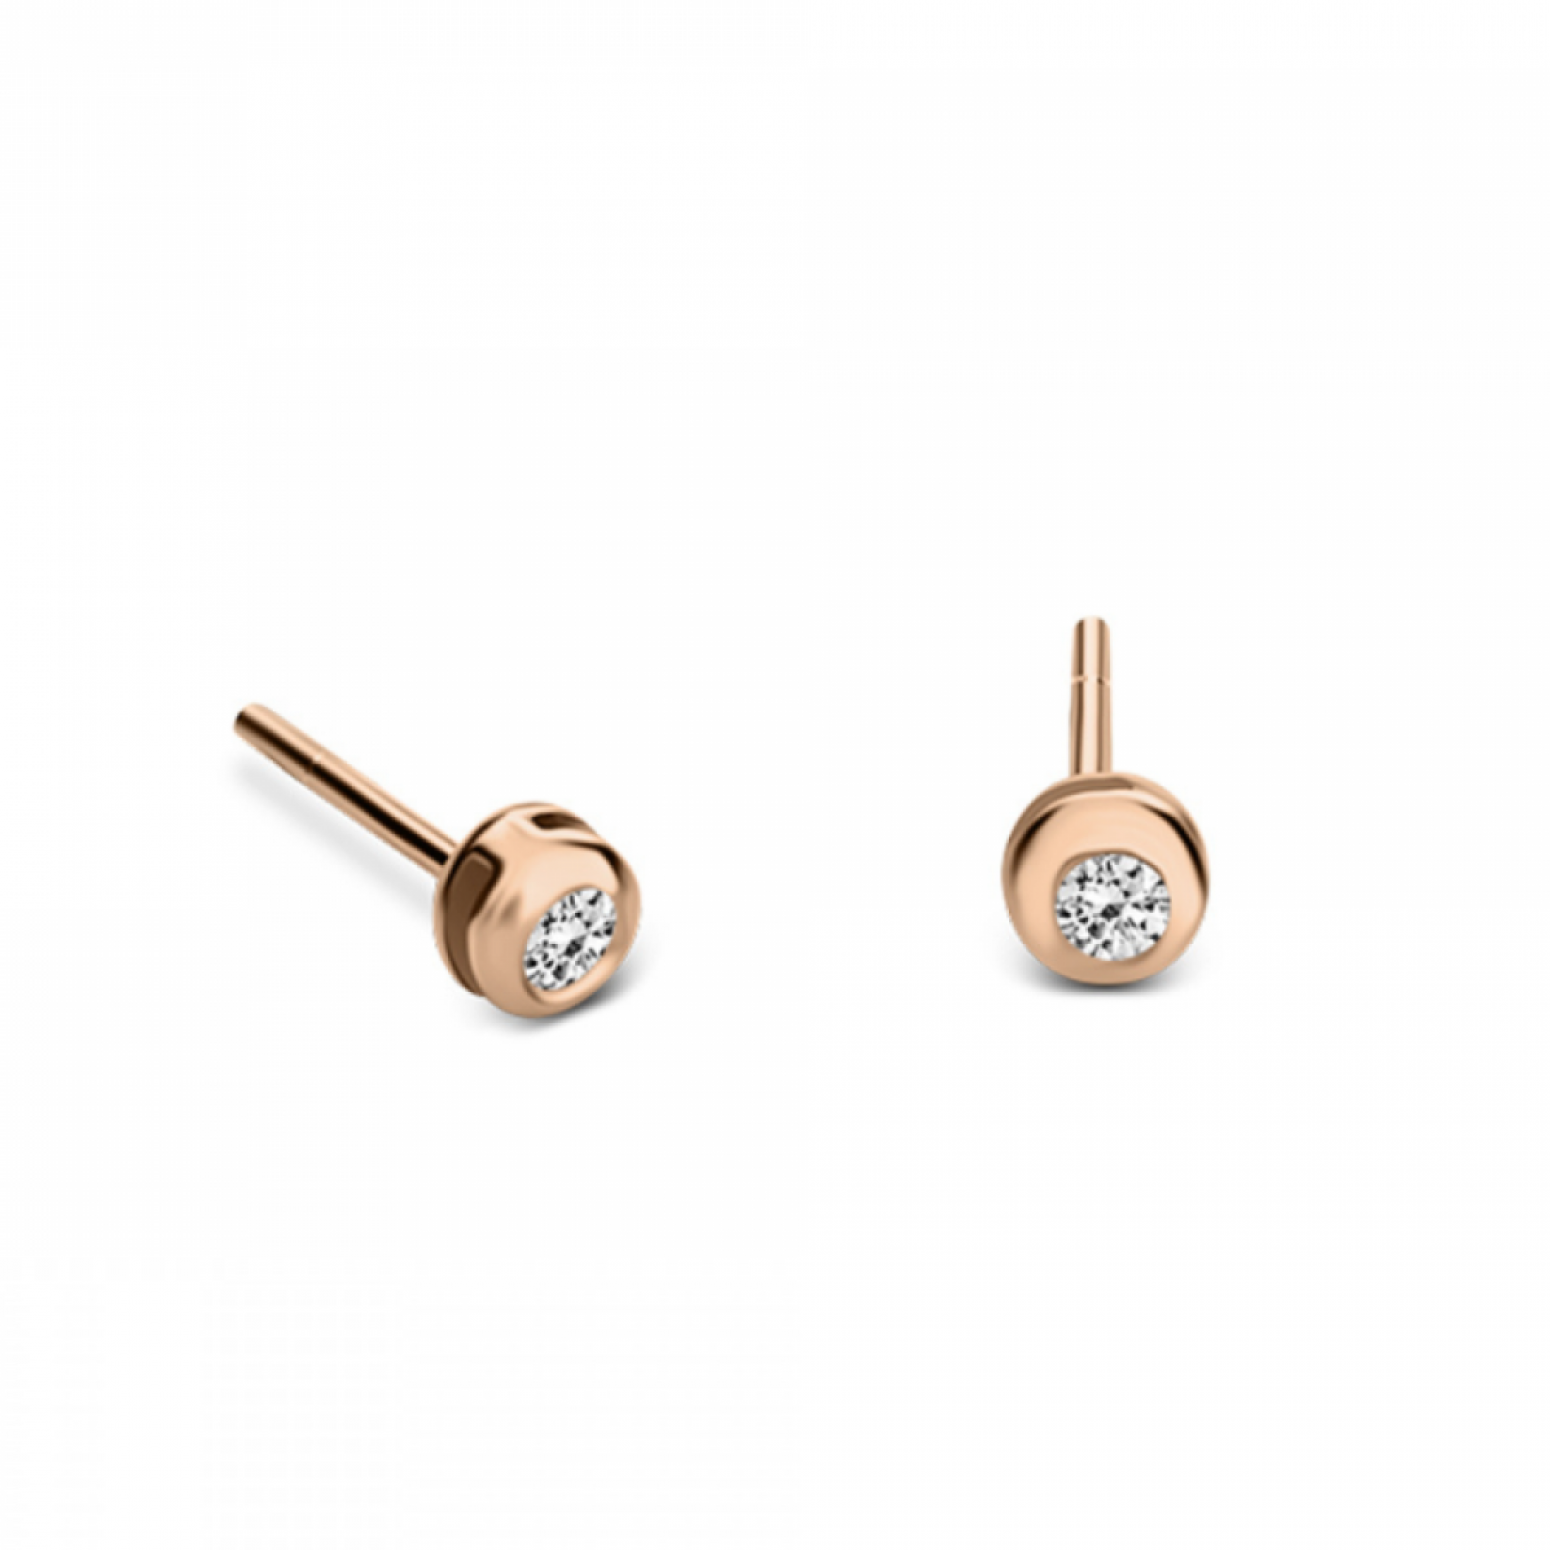 Solitaire earrings 9K pink gold with zircon, sk3489 EARRINGS Κοσμηματα - chrilia.gr